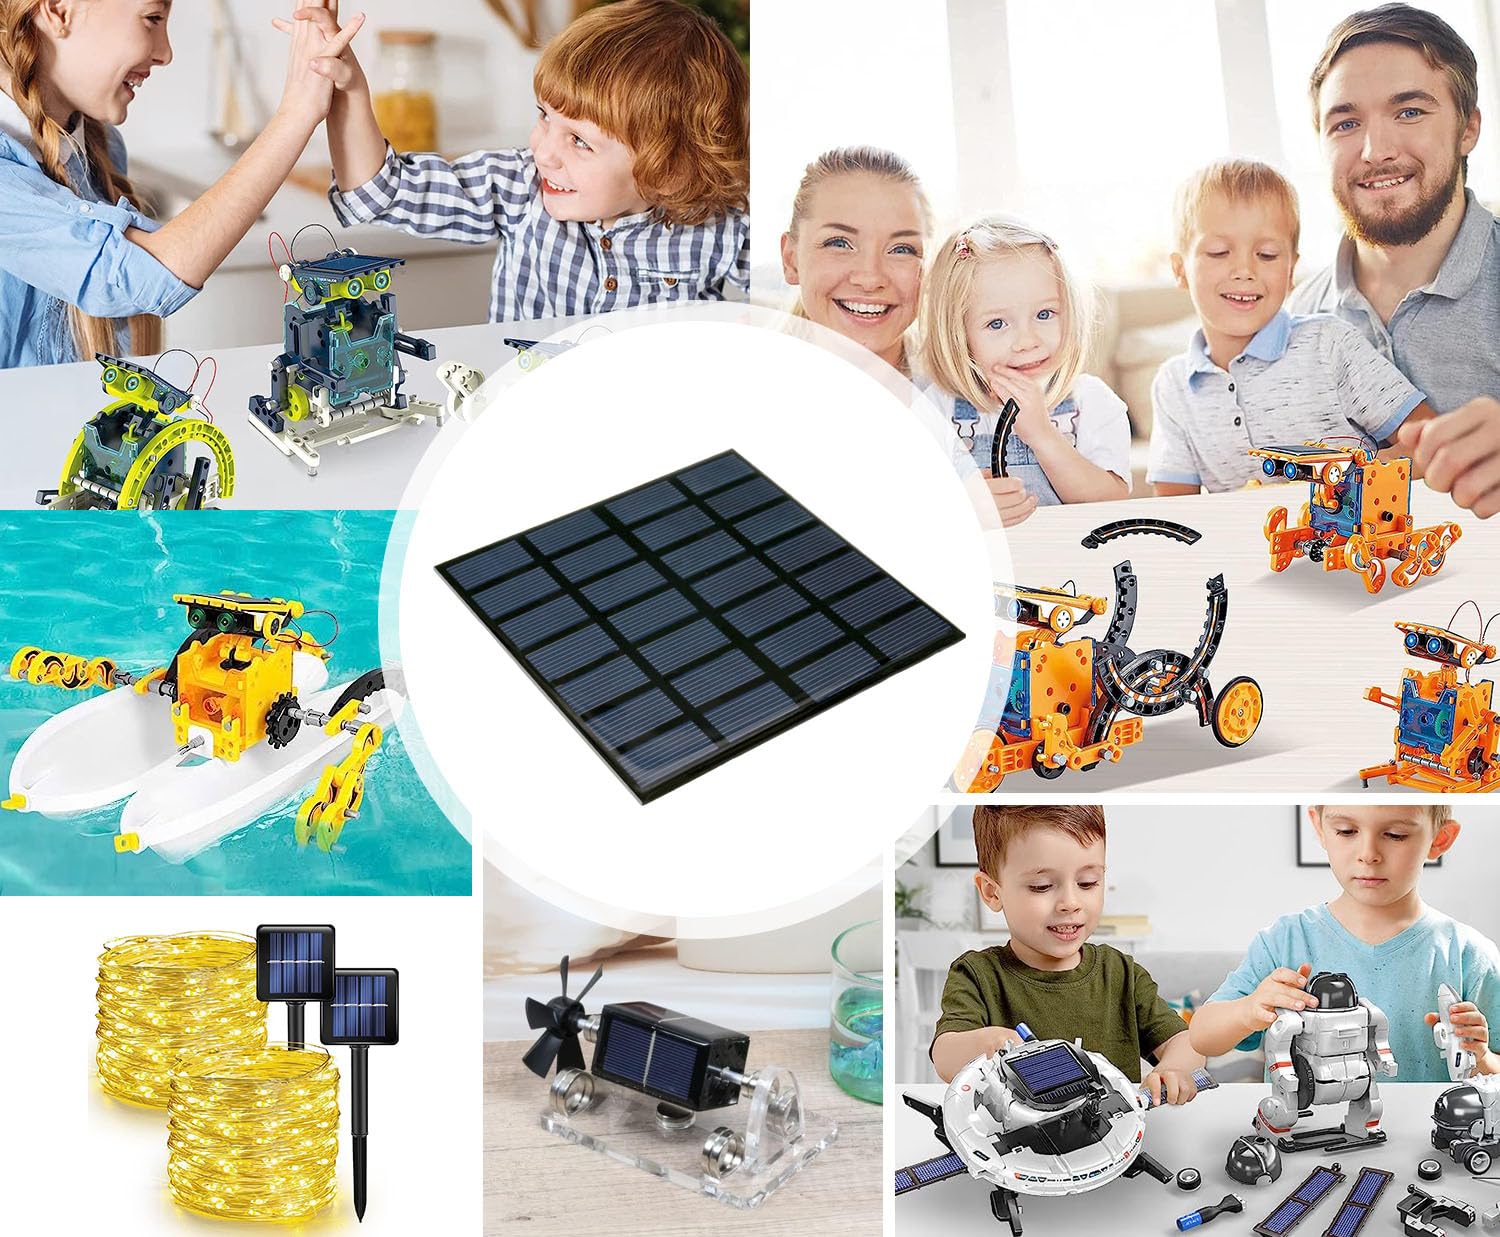 2Pcs Mini Solar Panels for Solar Power, 7V 120mA Mini Solar Panel Kit DIY Electric Toy Photovoltaic Cells Solar Epoxy Cell Charger 6.5"*6.5"(110mm*110mm)